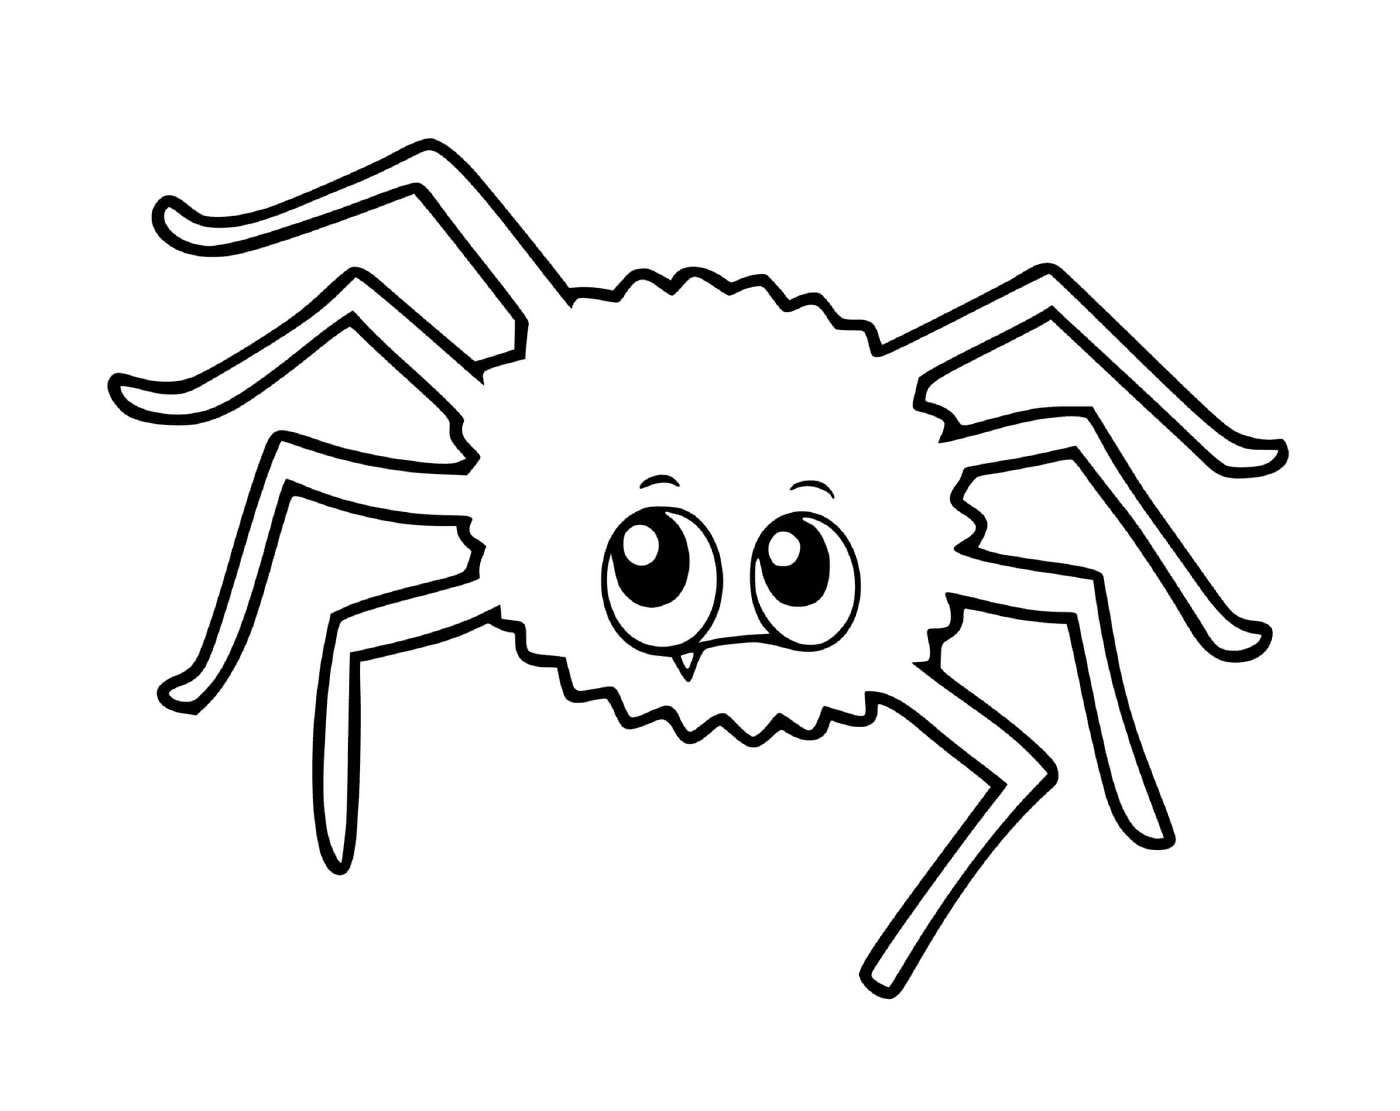   Une araignée 